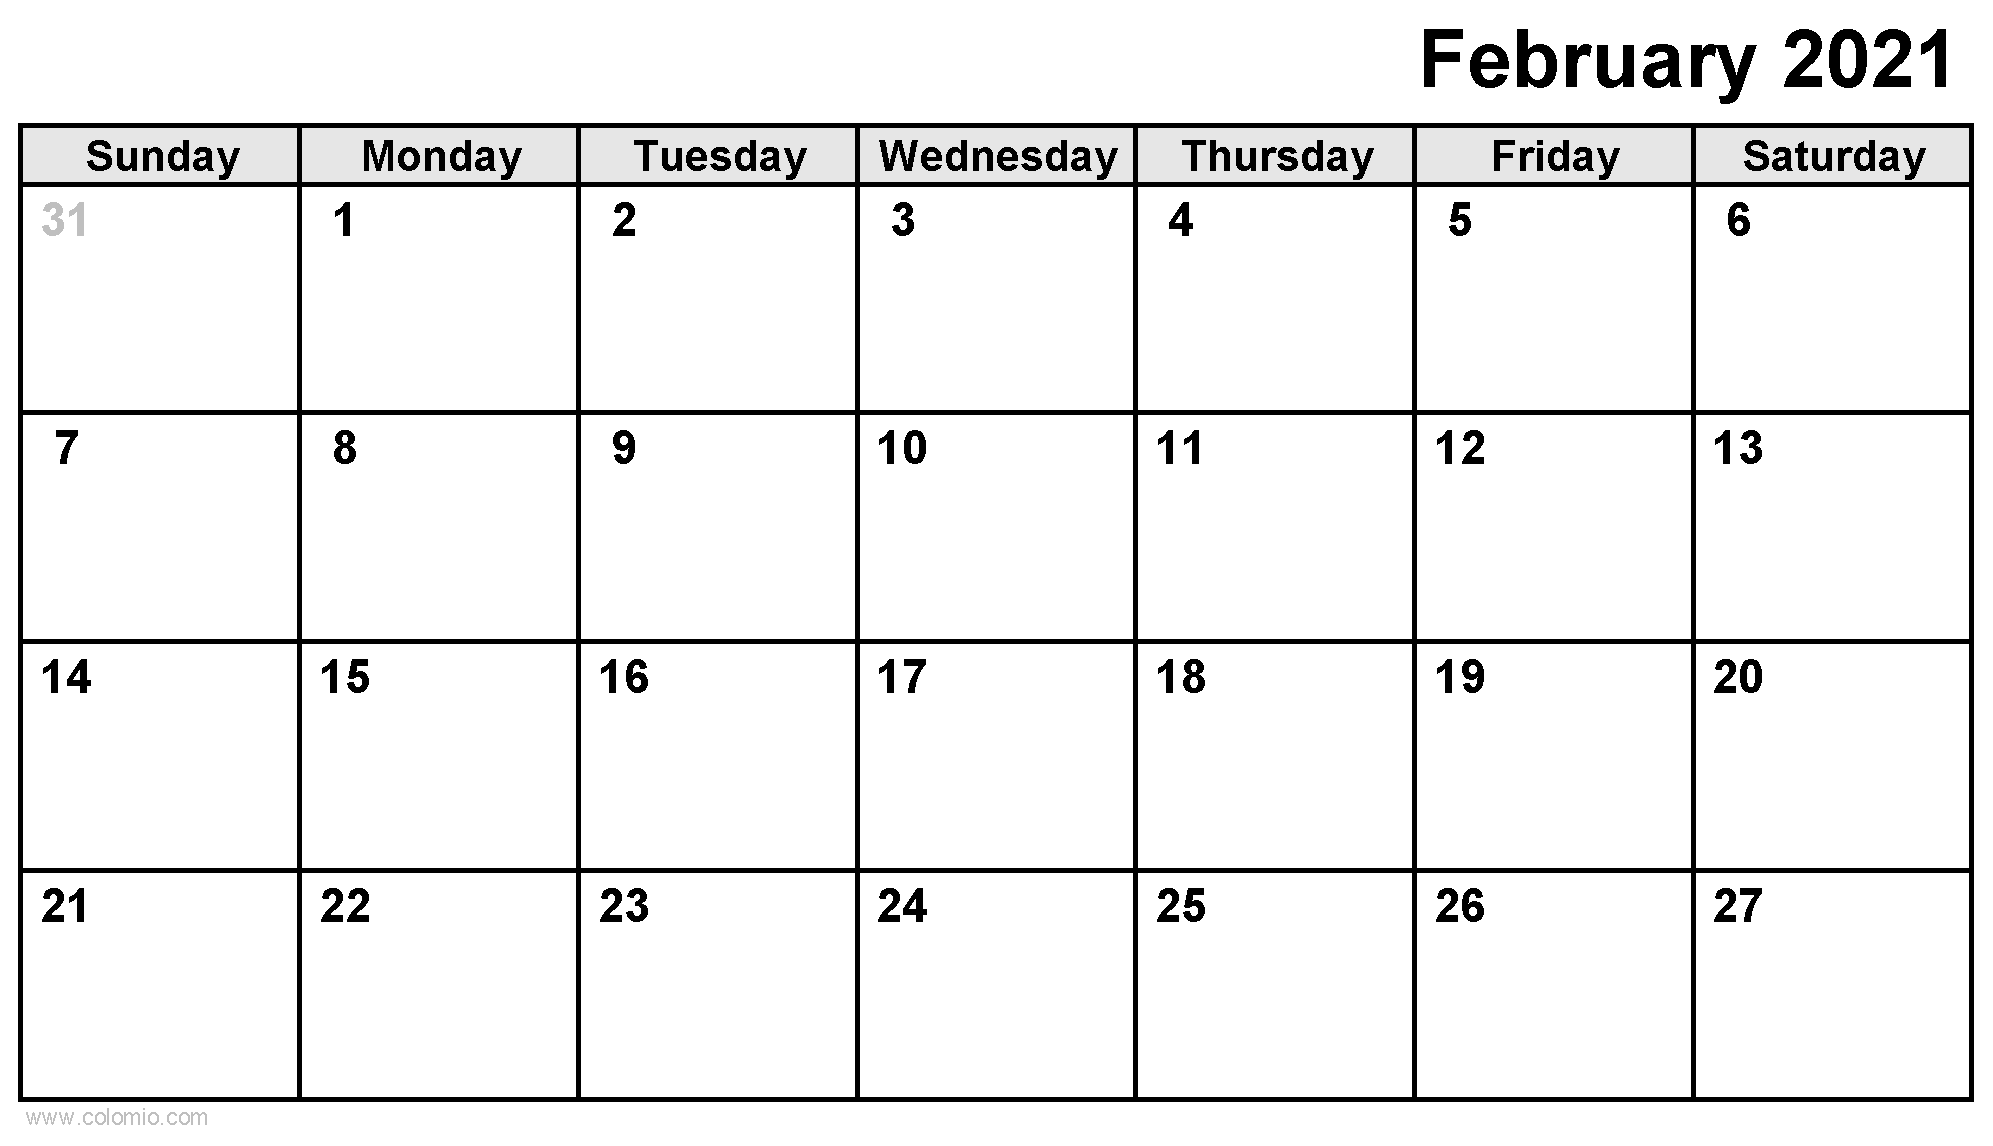 February 2021 Calendar printable